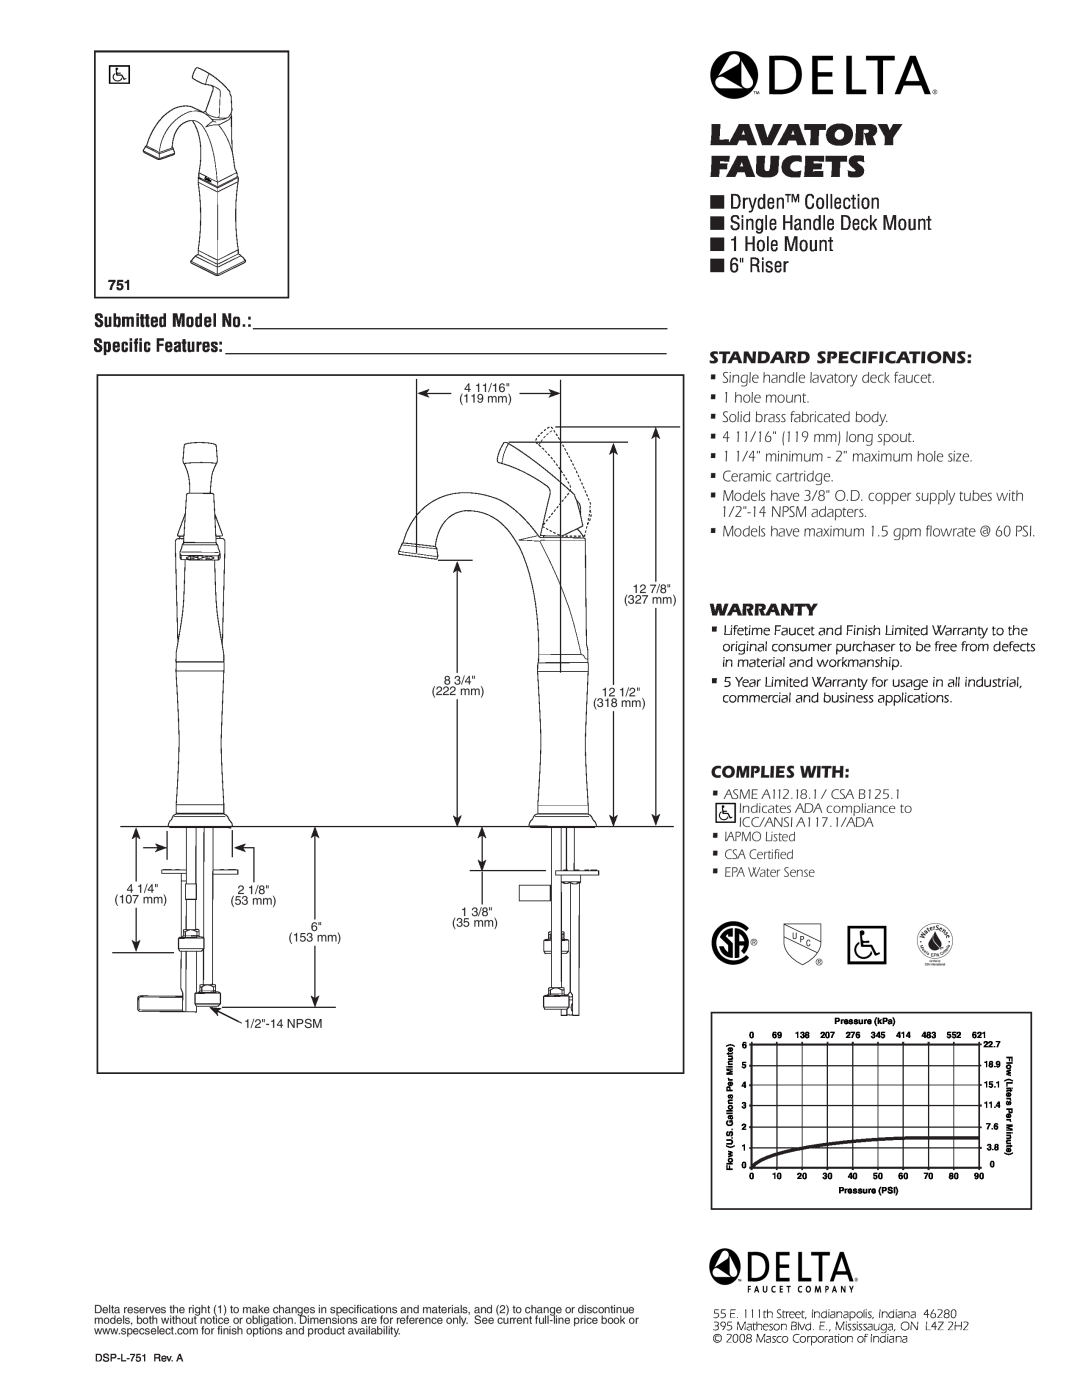 Delta 751 specifications Lavatory FAUCETS, Dryden Collection Single Handle Deck Mount 1 Hole Mount 6 Riser, Warranty 